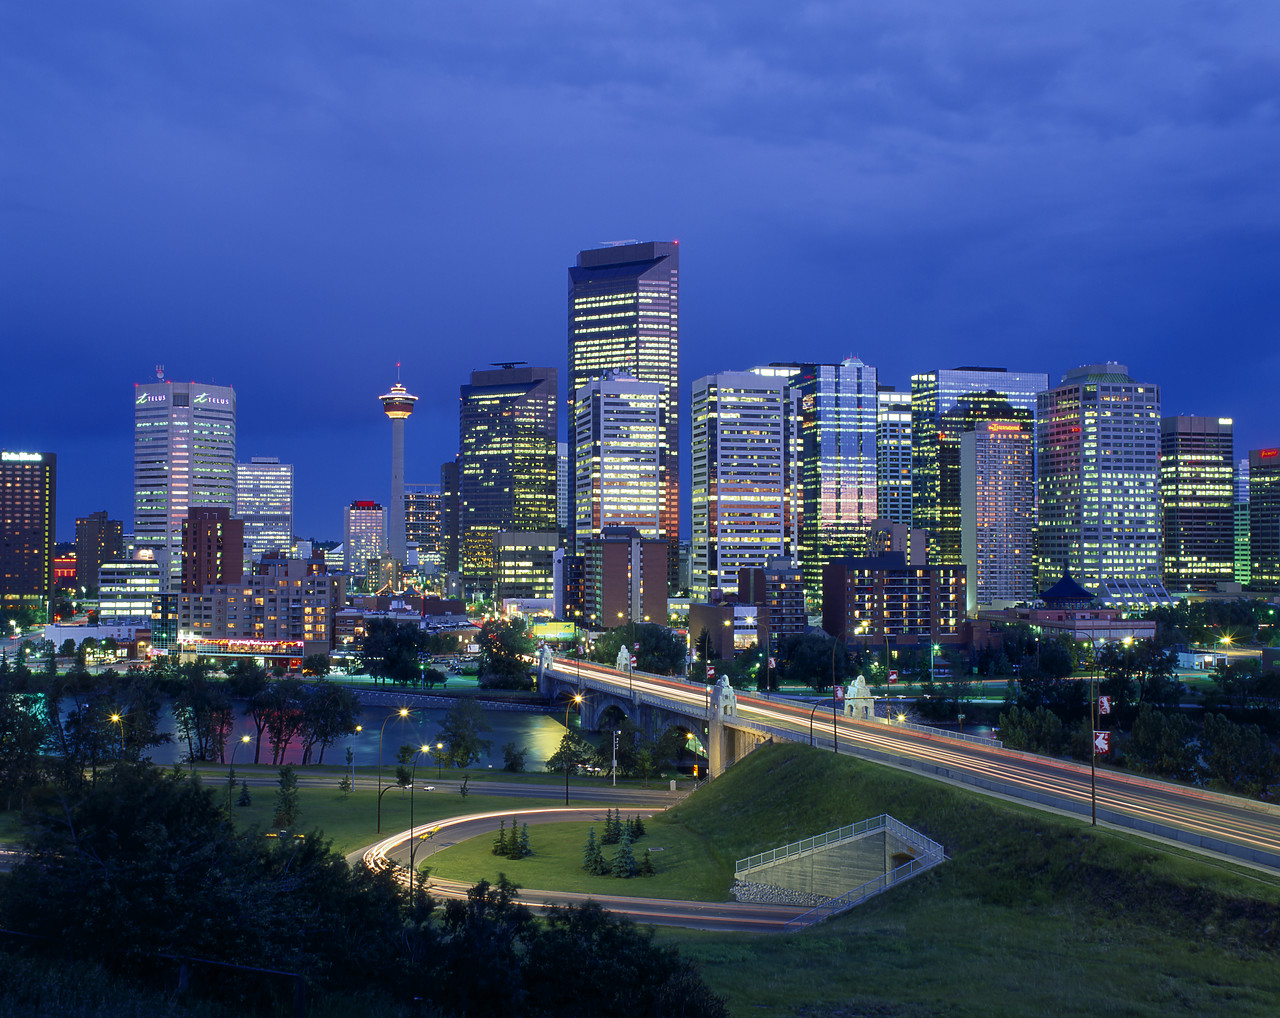 #980927-1 - Calgary Skyline at Night, Alberta, Canada